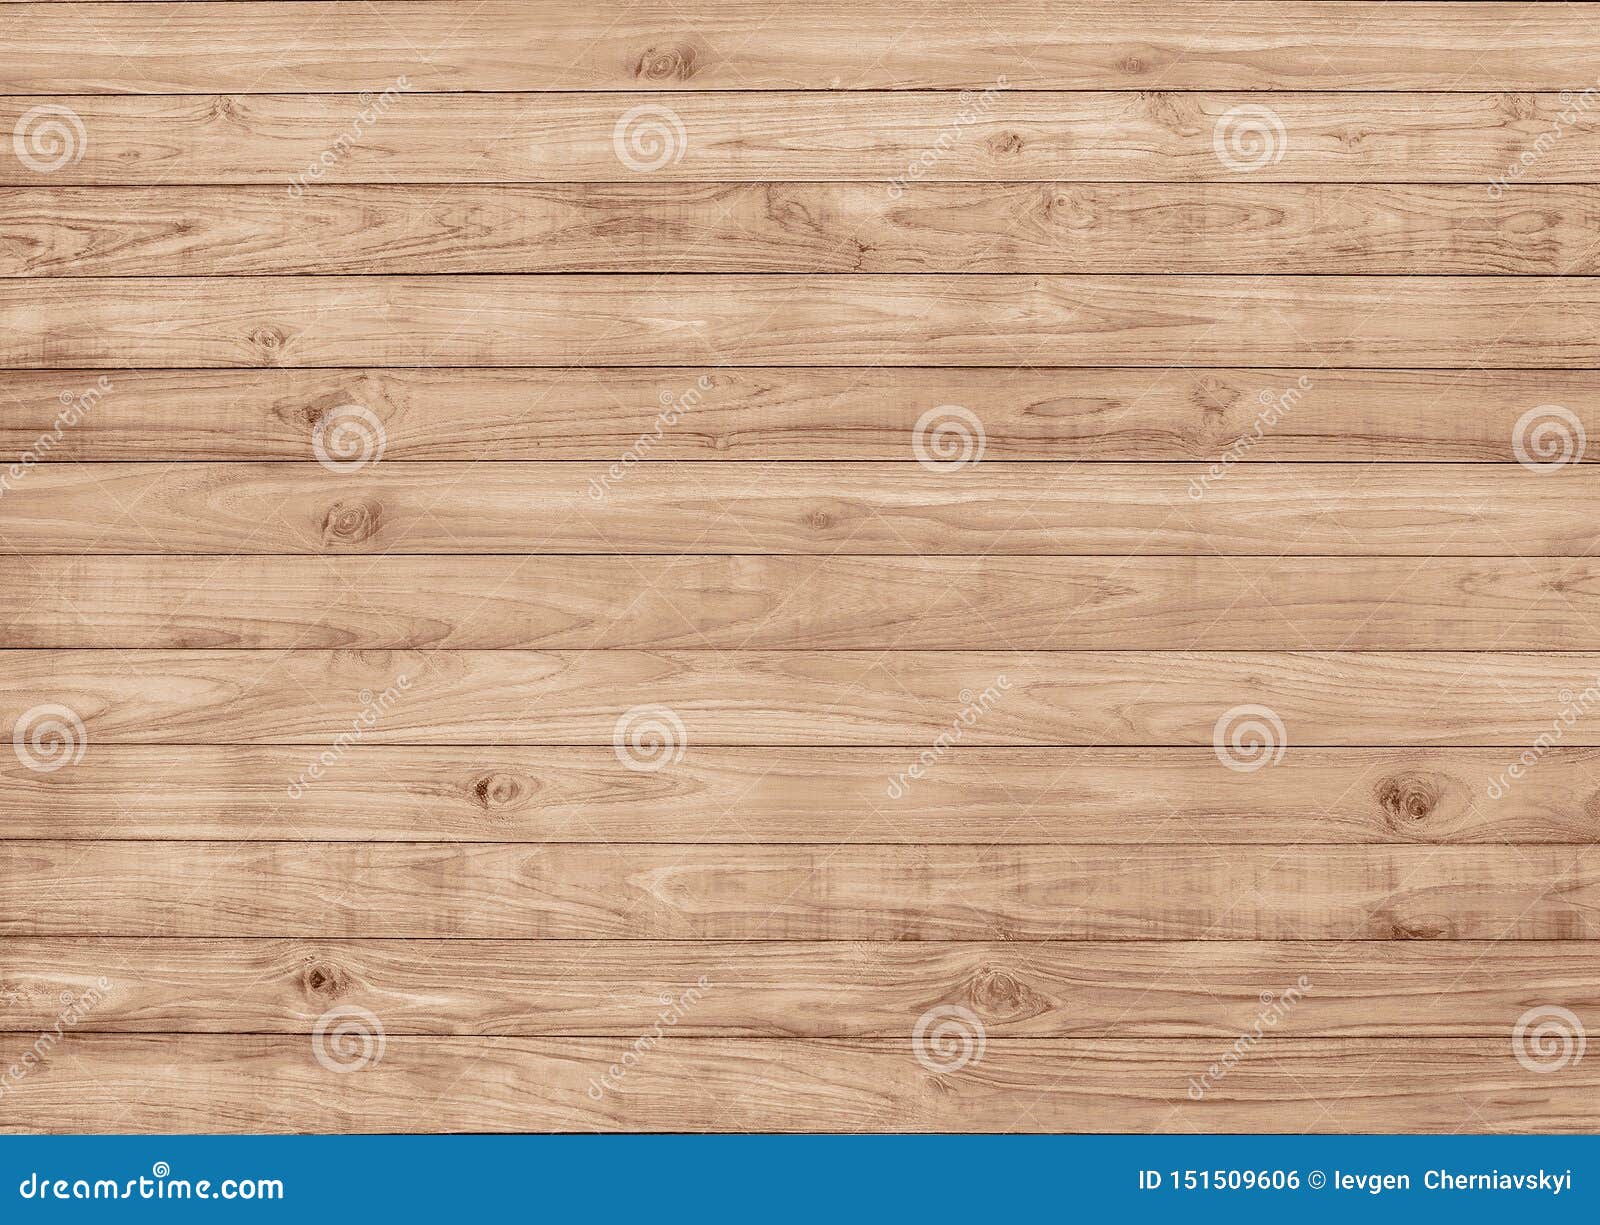 wood boardwalk decking surface pattern seamless, texture